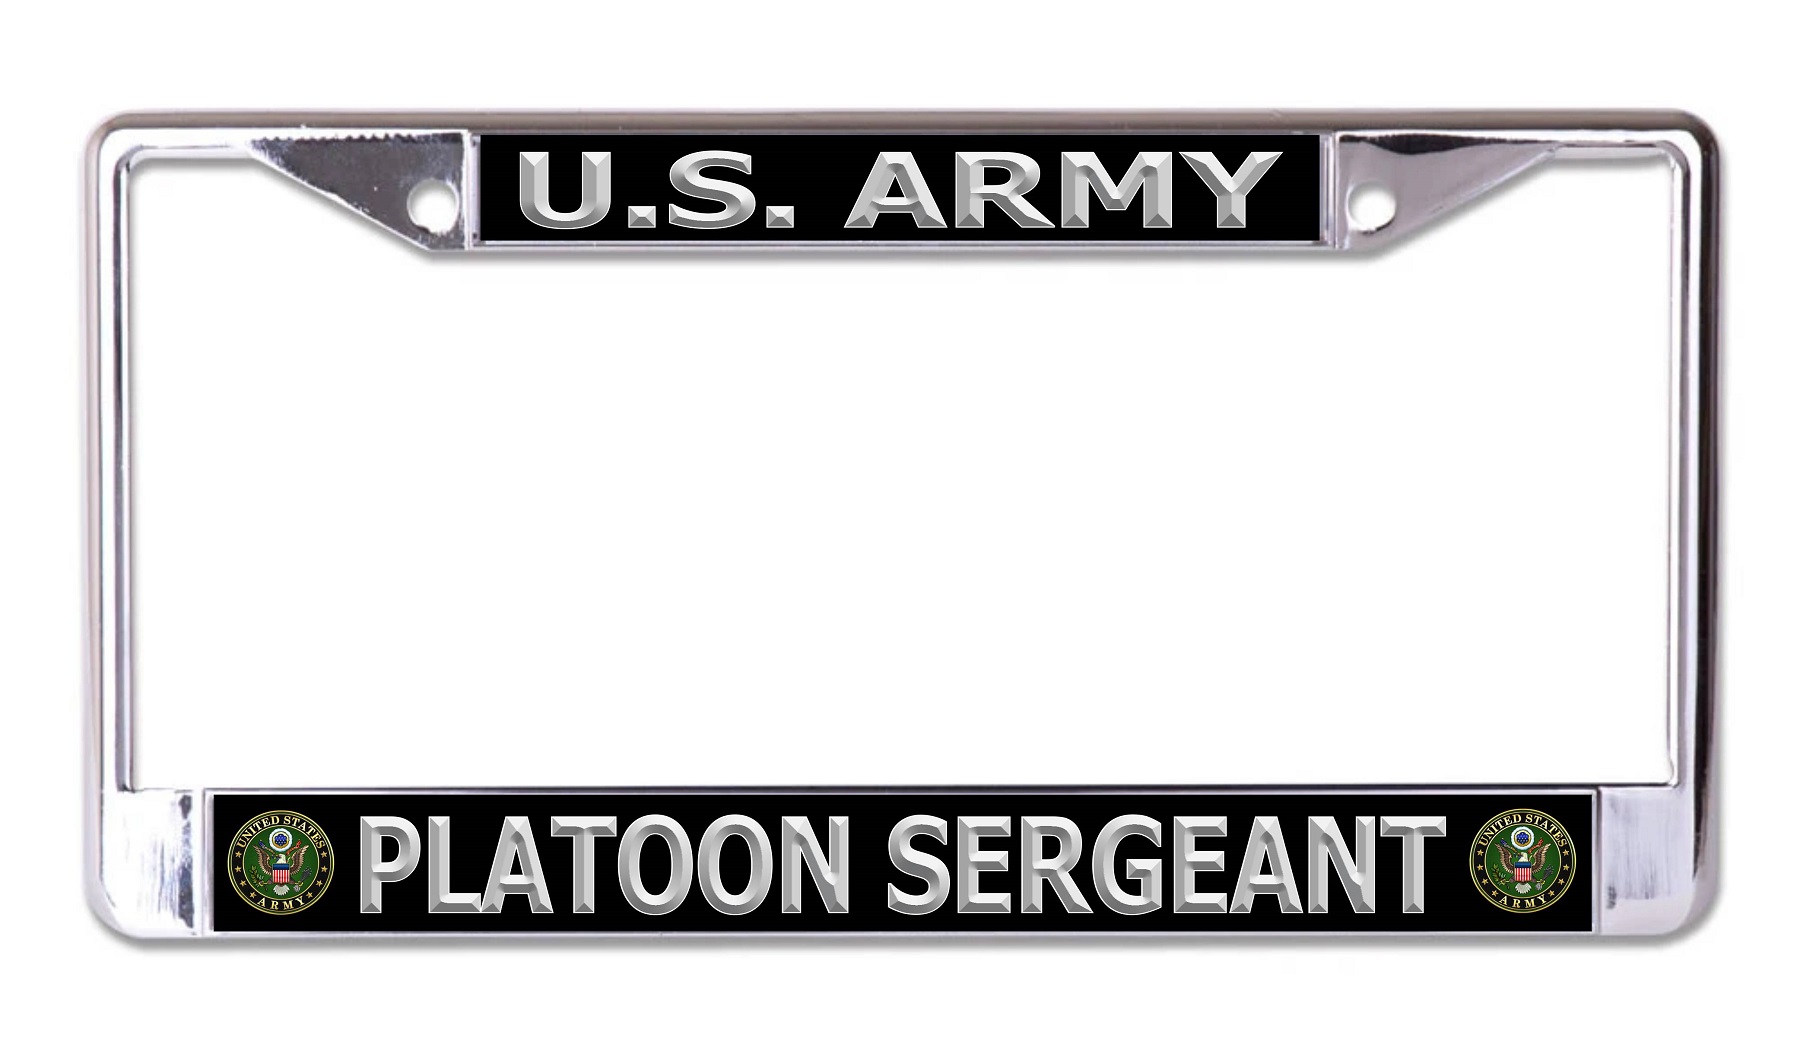 U.S. Army Platoon Sergeant Chrome LICENSE PLATE Frame